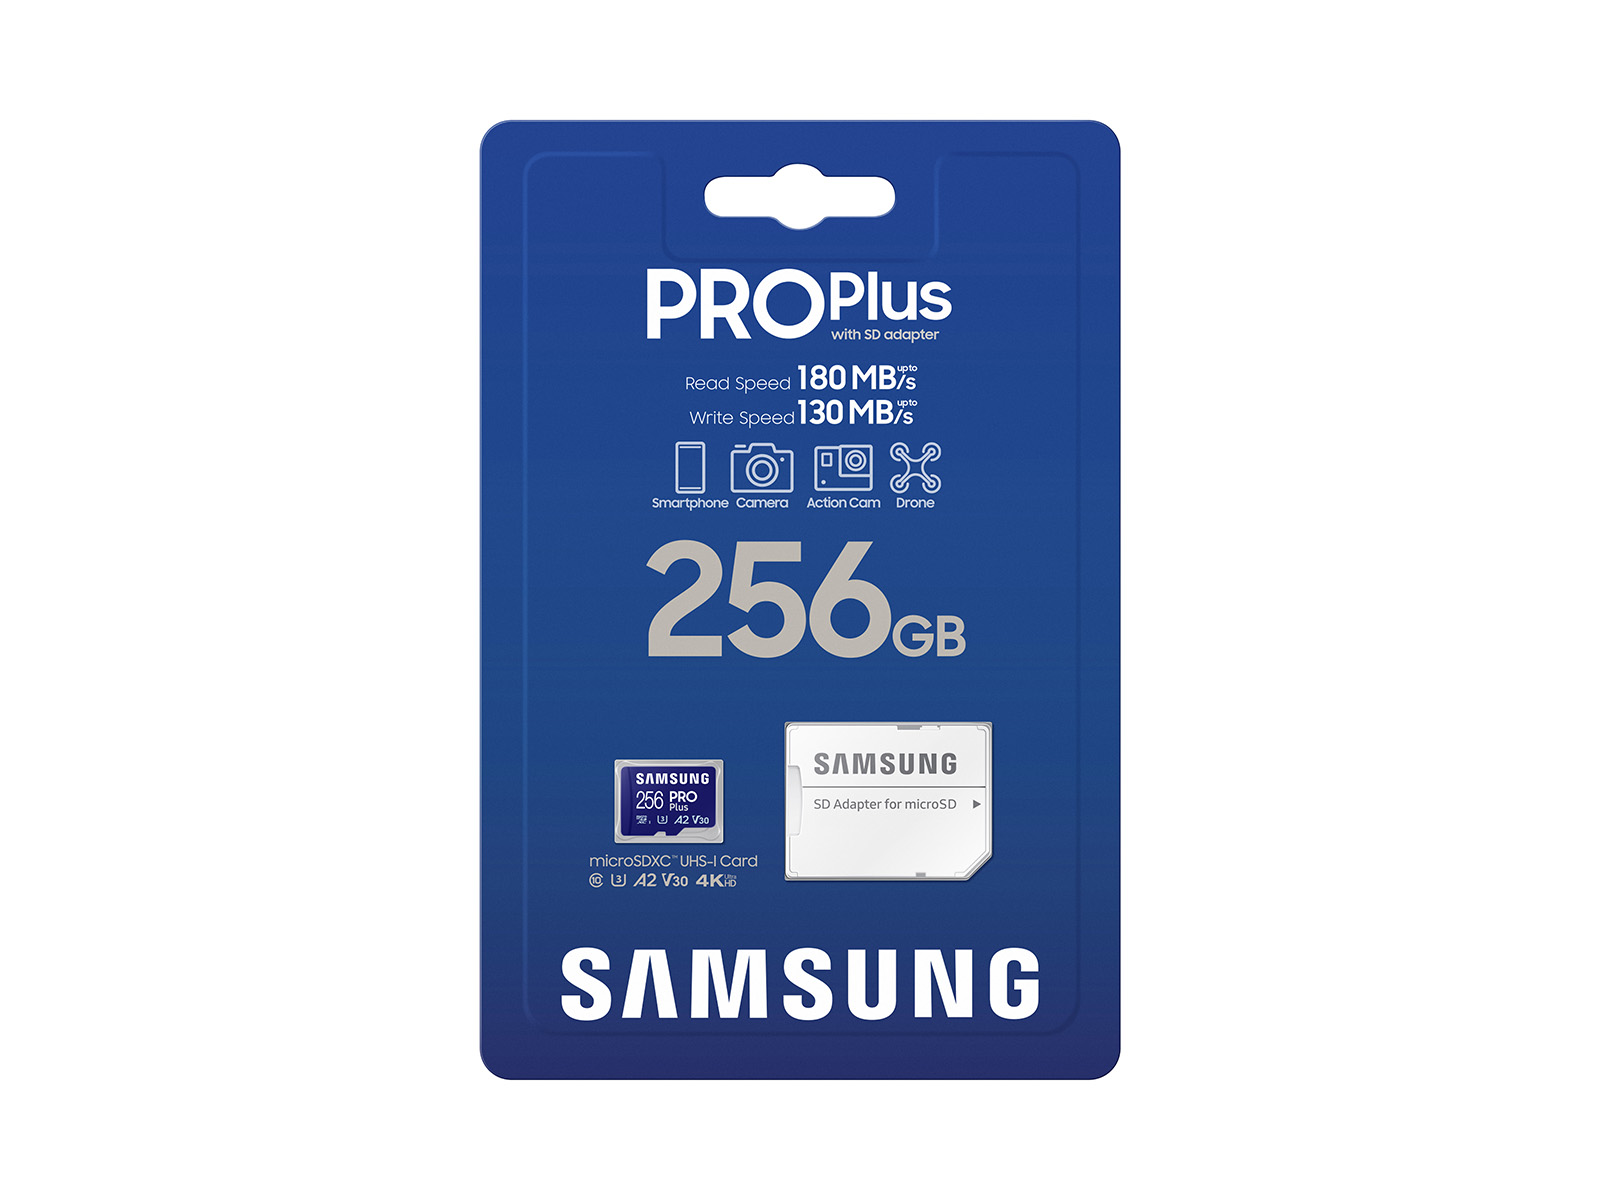 Samsung EVO Plus microSDXC UHS-I Card Review (256GB) - So Much V-NAND!